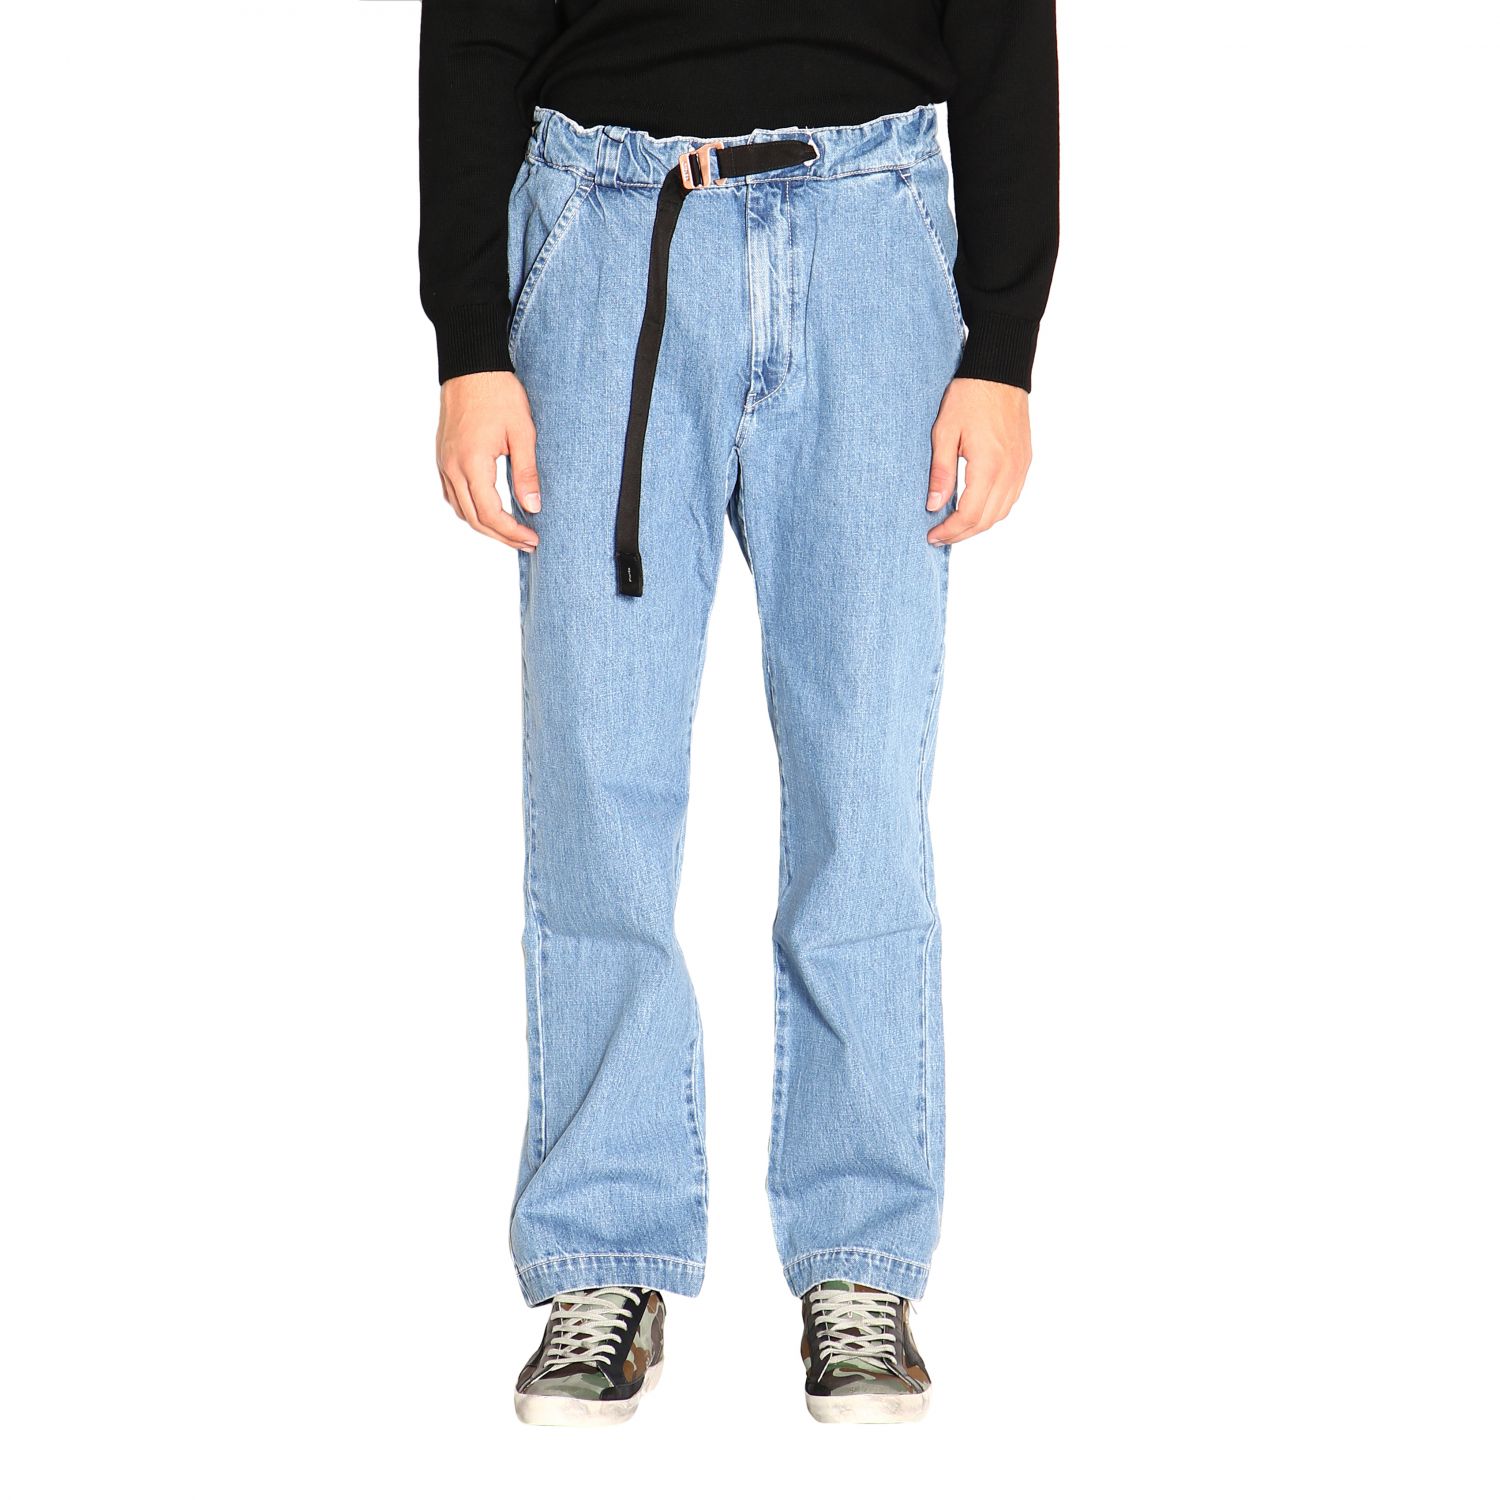 Jeans men Kenzo | Jeans Kenzo Men Denim | Jeans Kenzo PF965PA5412GB ...